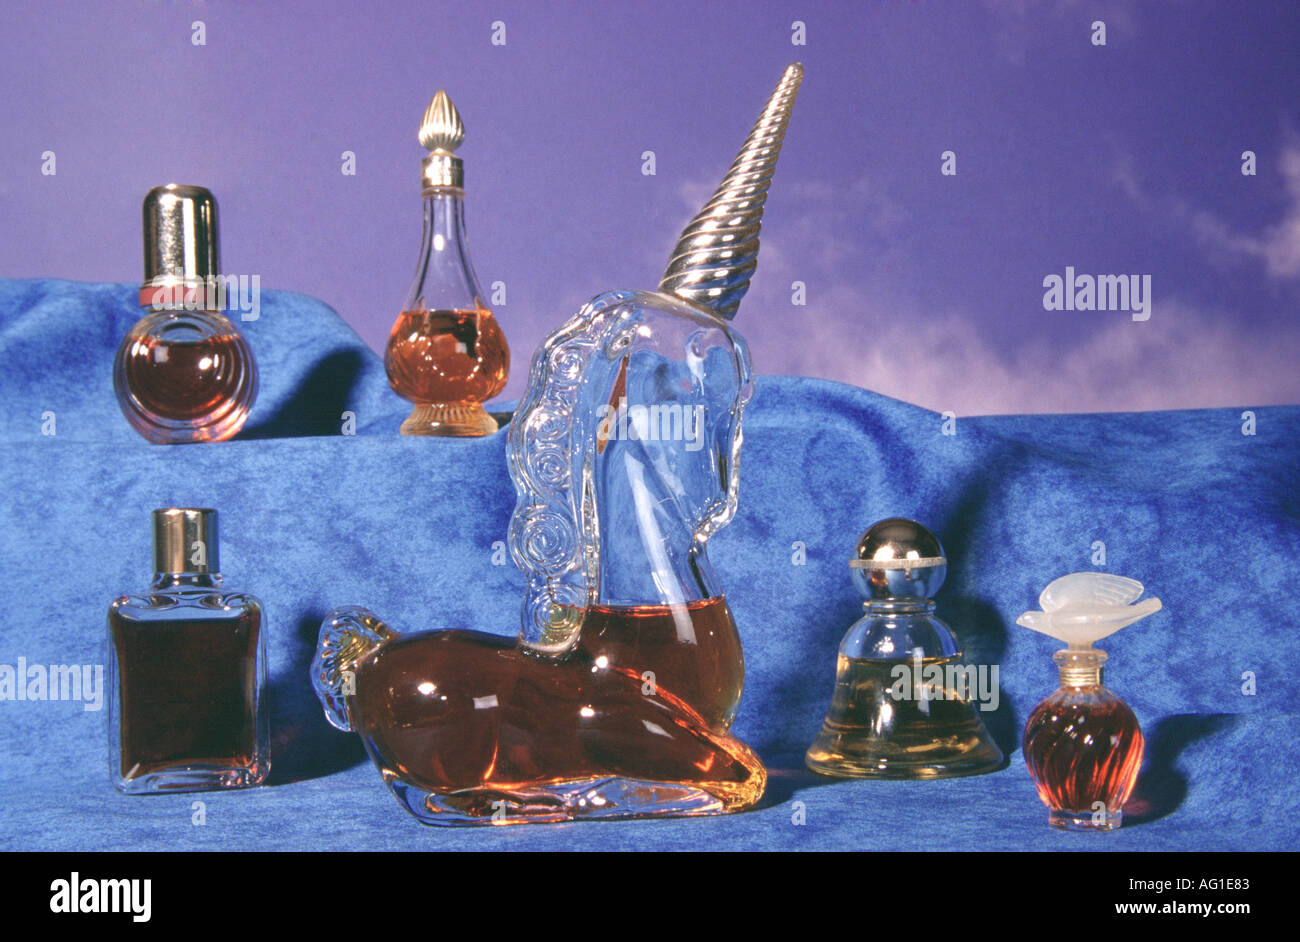 Perfume Stock Photo